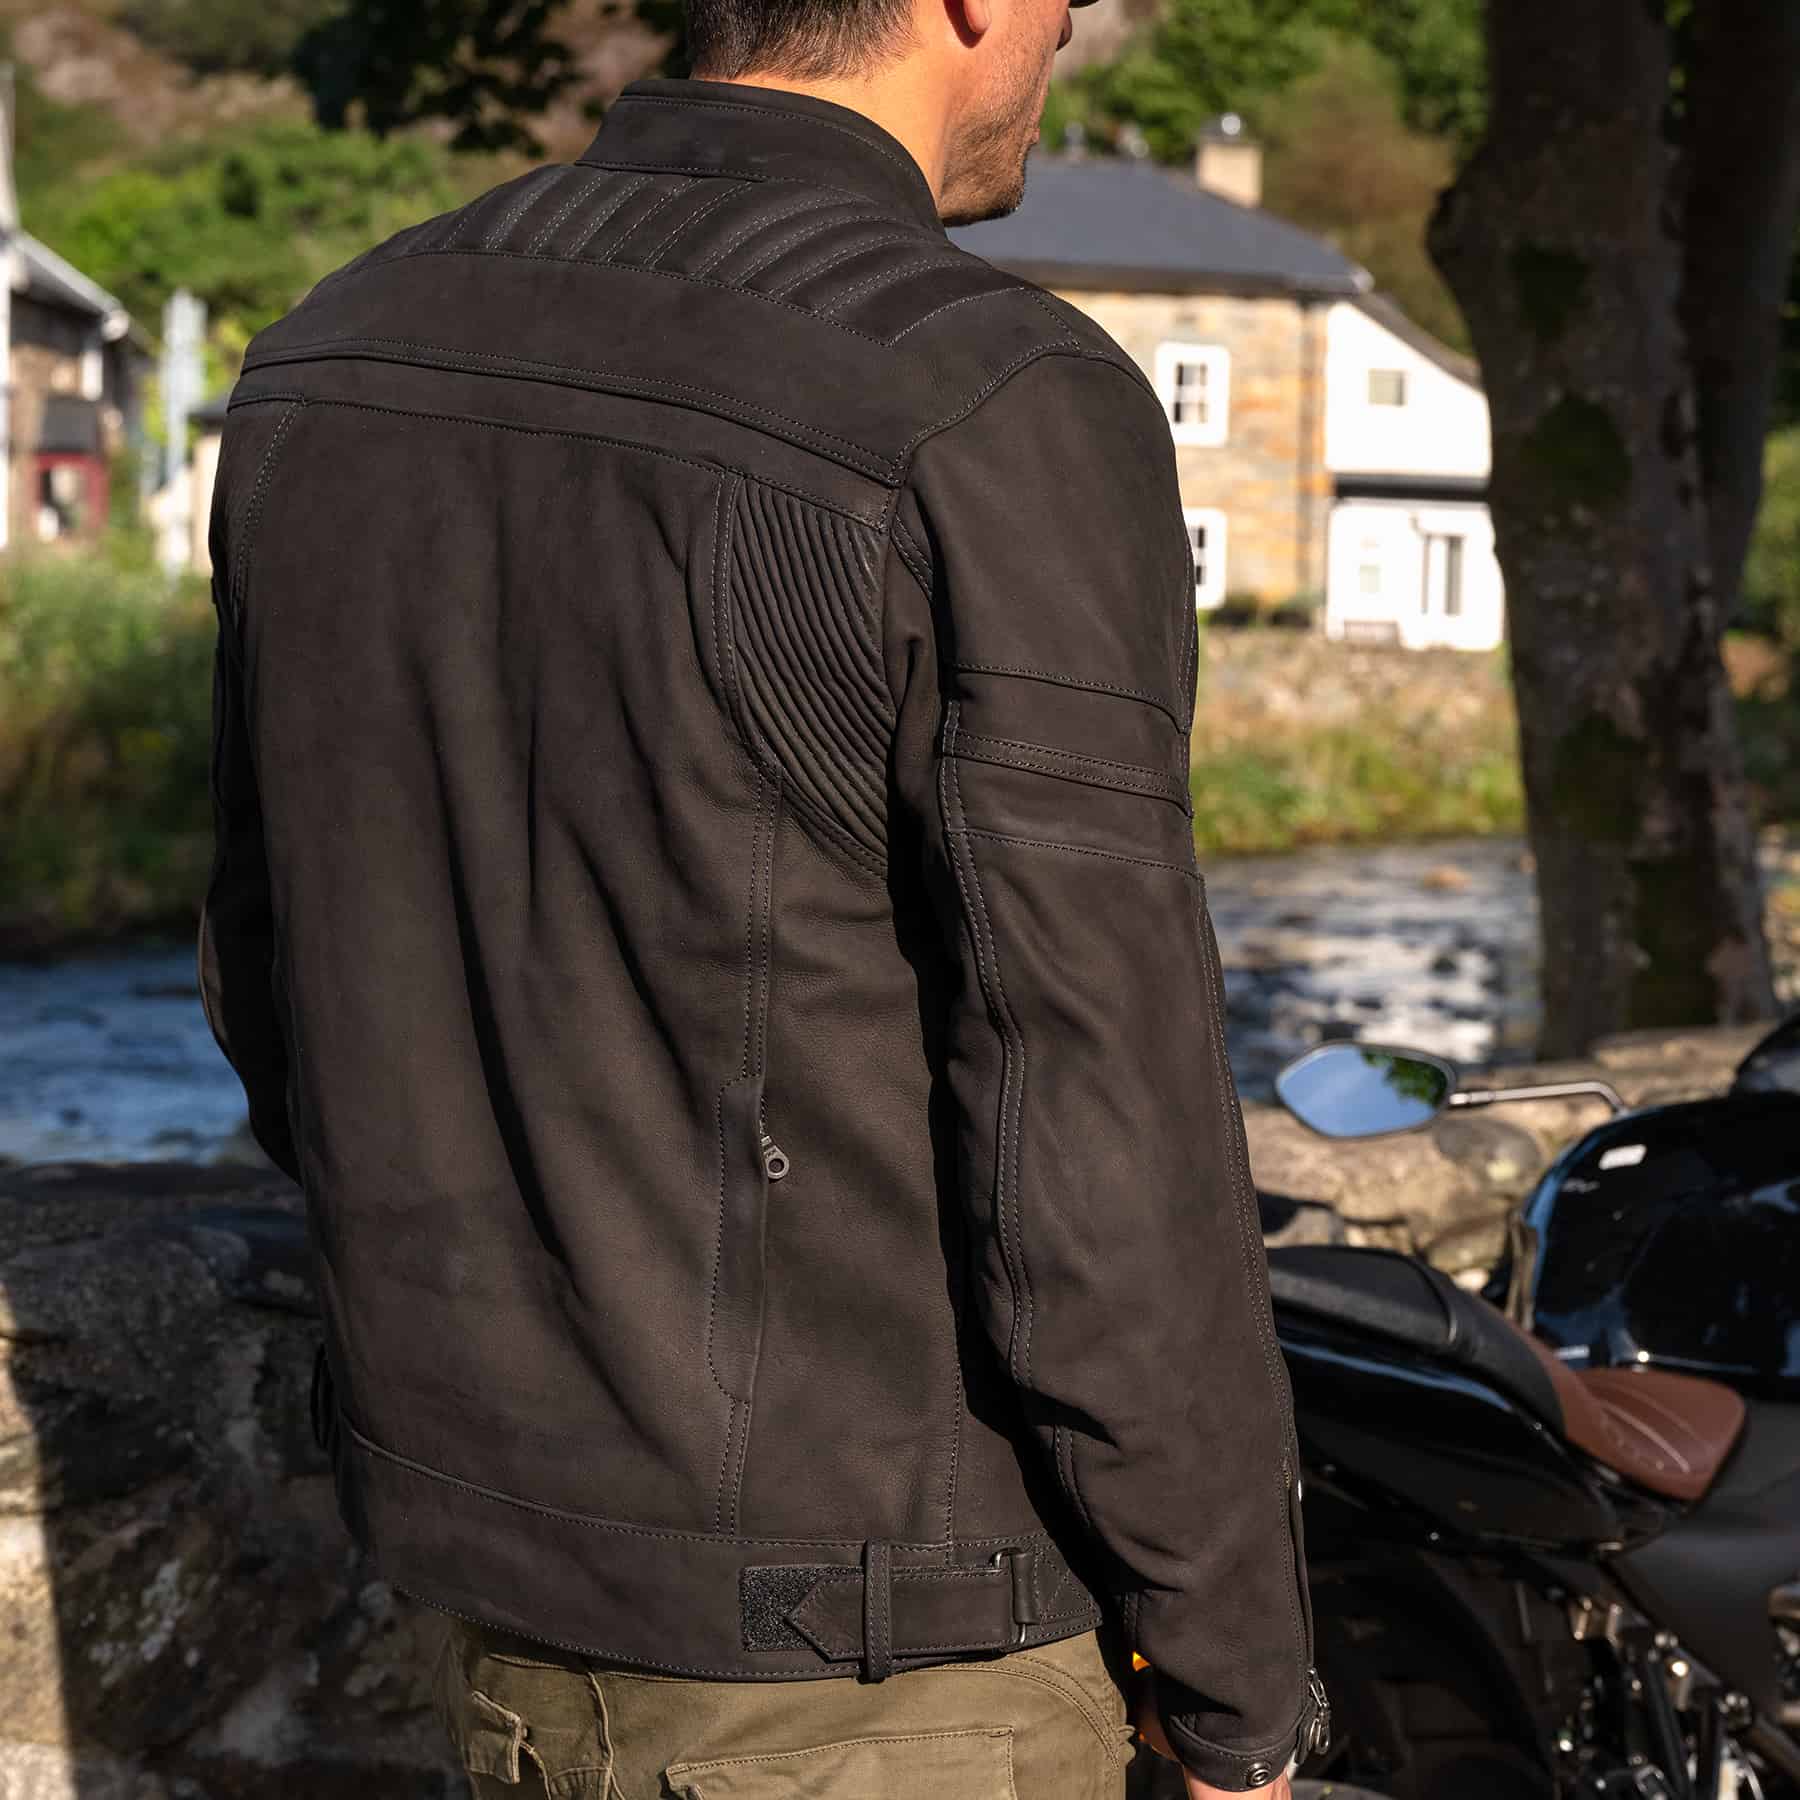 Merlin Miller leather jacket in black